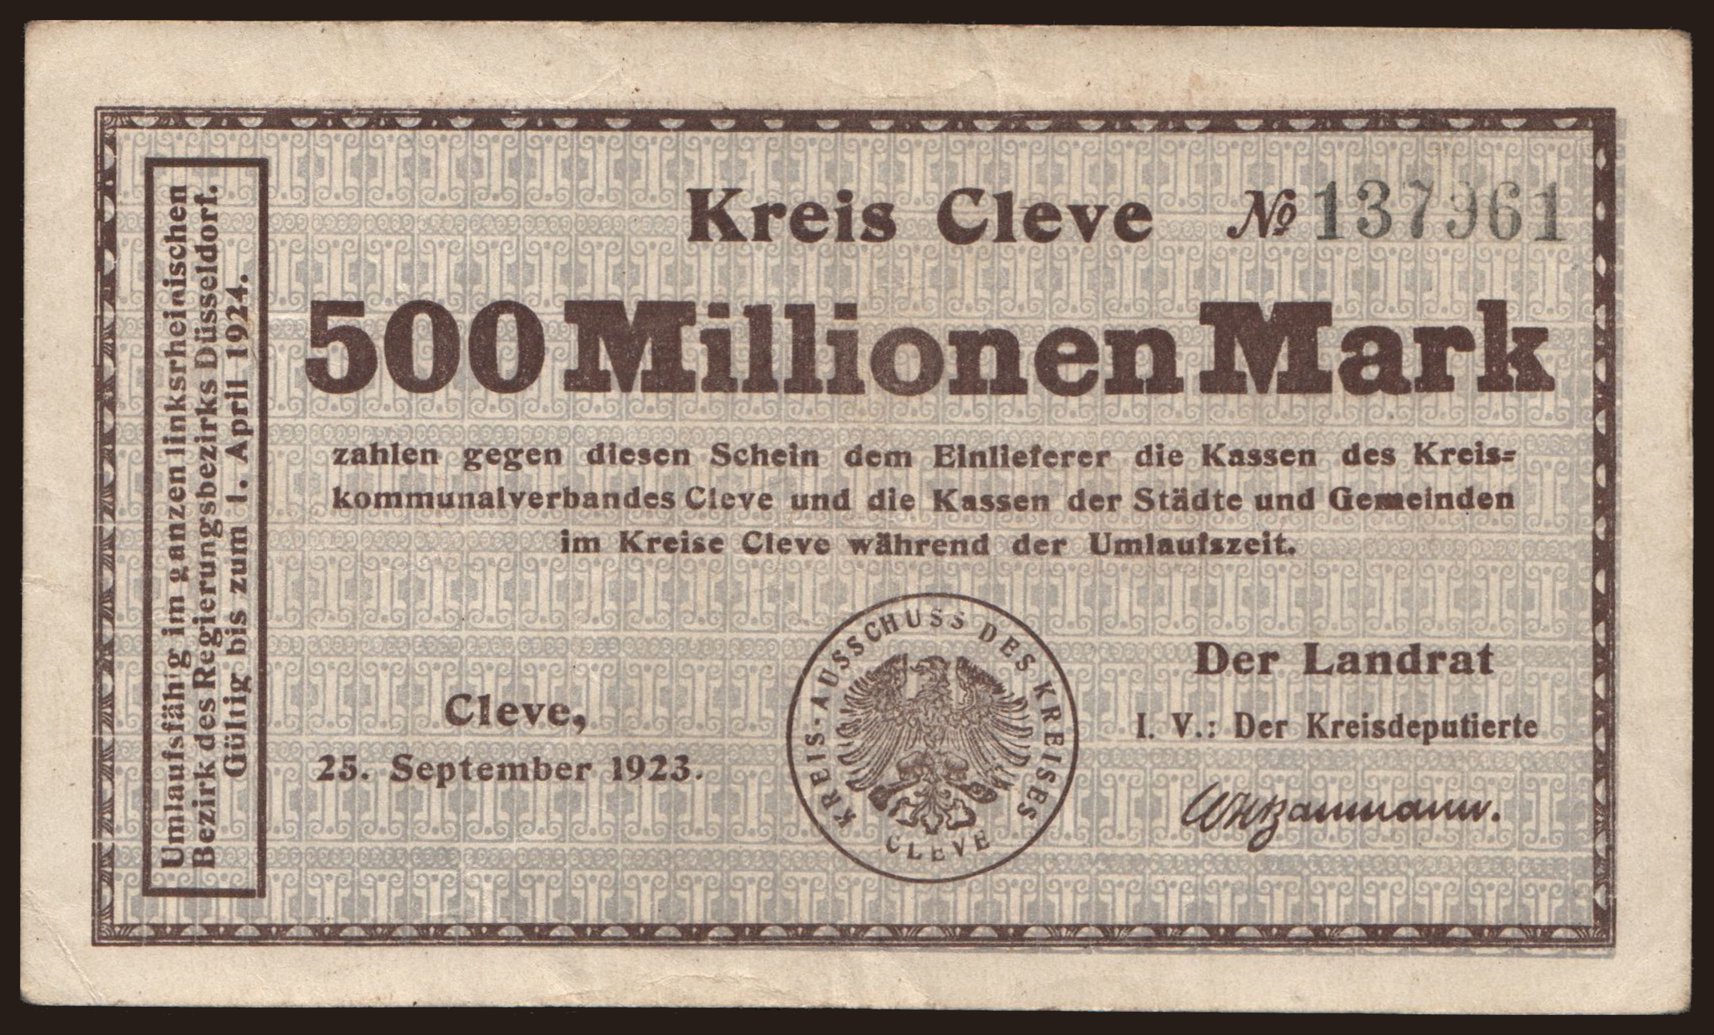 Cleve/ Kreis, 500.000.000 Mark, 1923